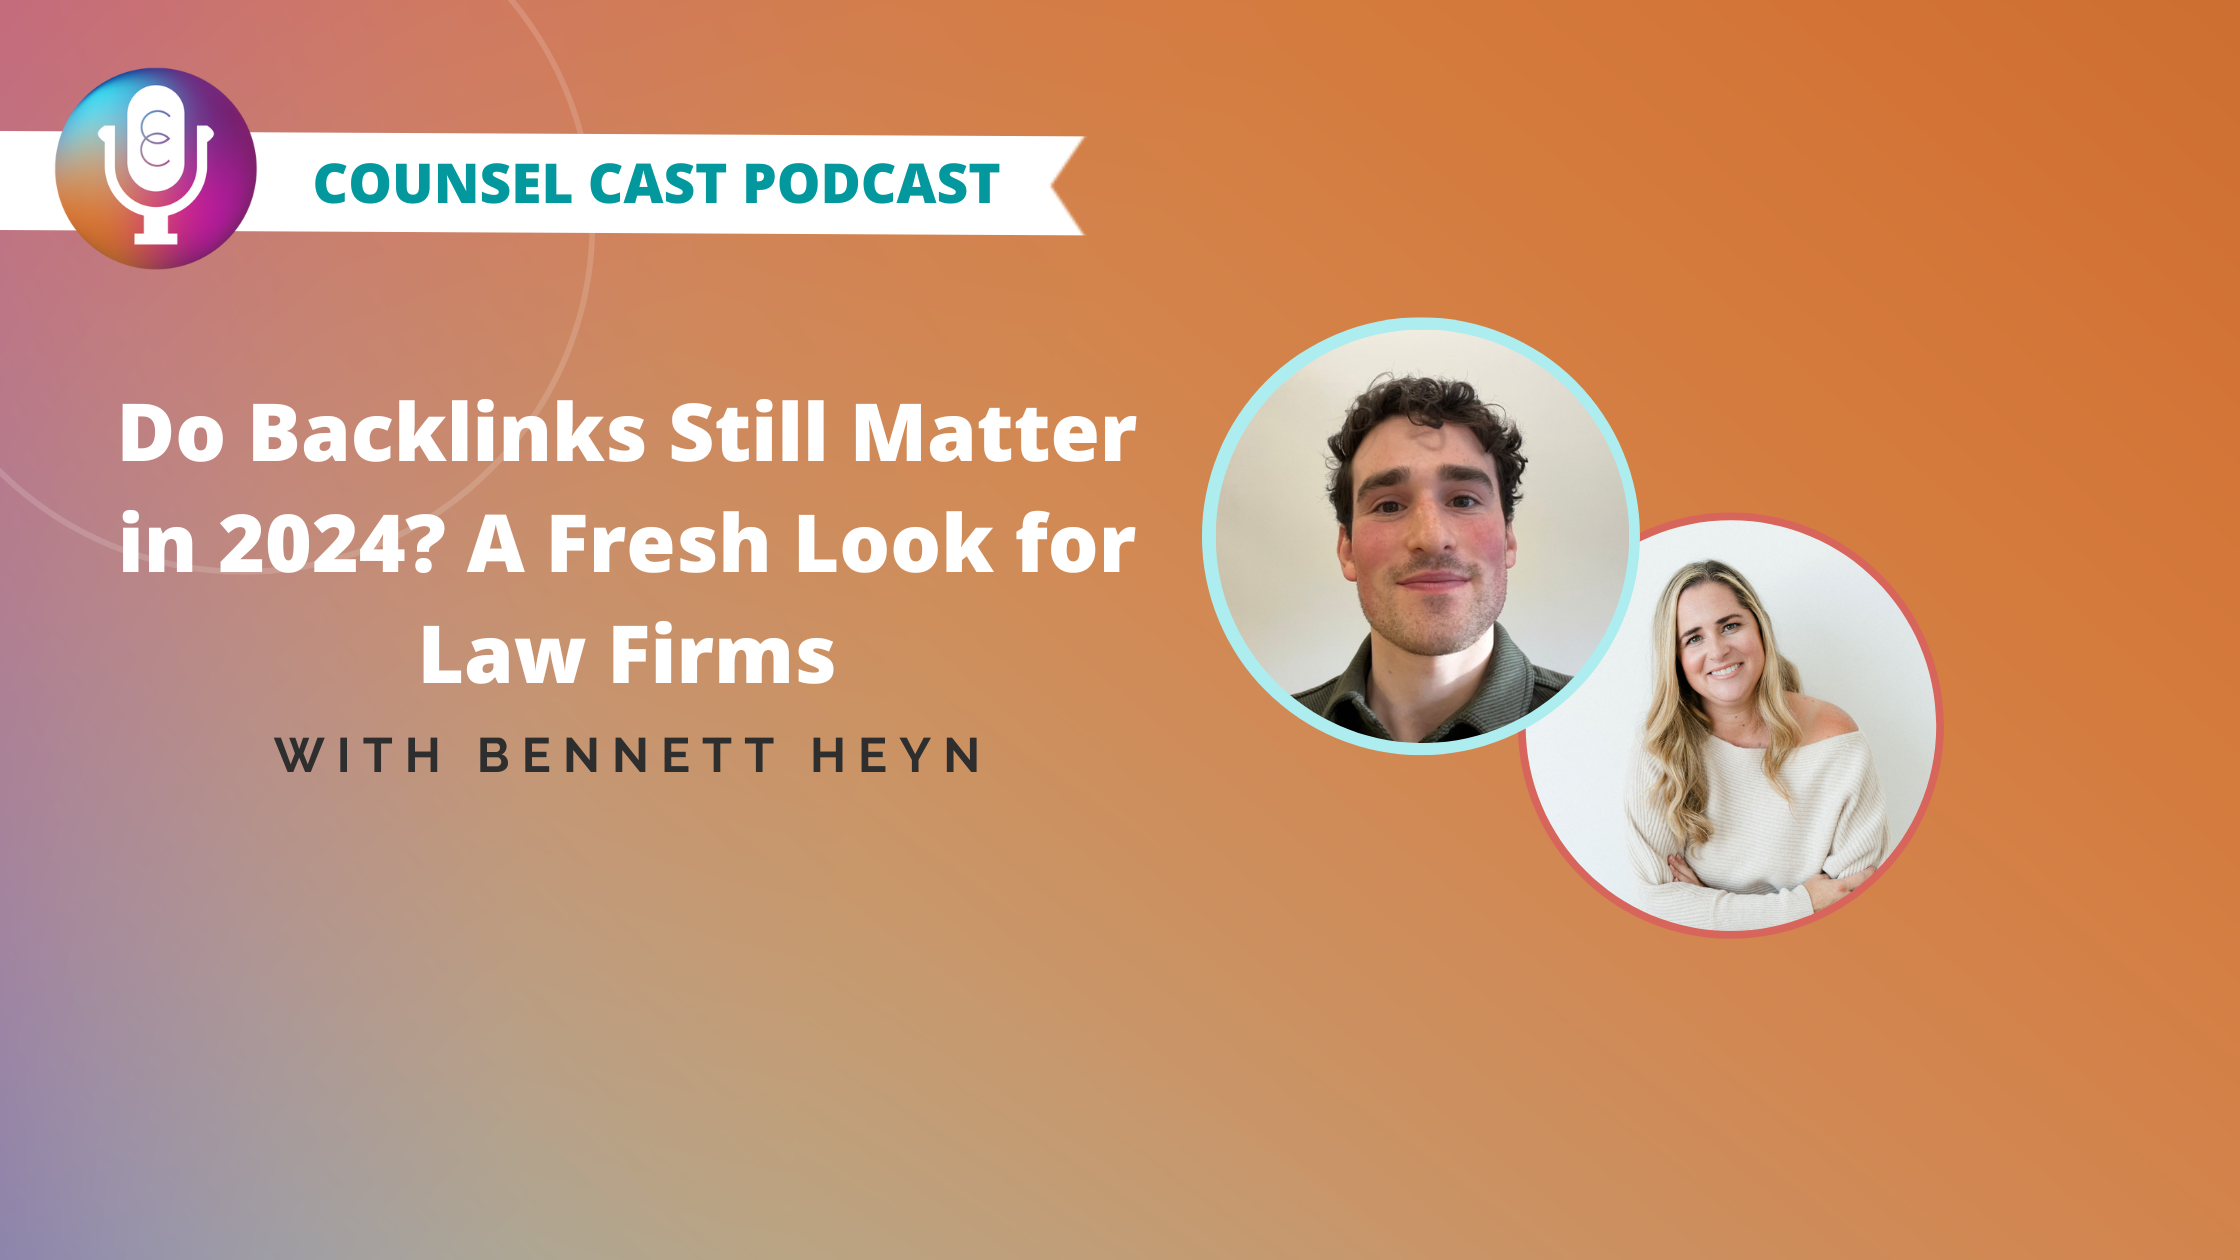 Do Backlinks Still Matter in 2024? A Fresh Look for Law Firms with Bennett Heyn